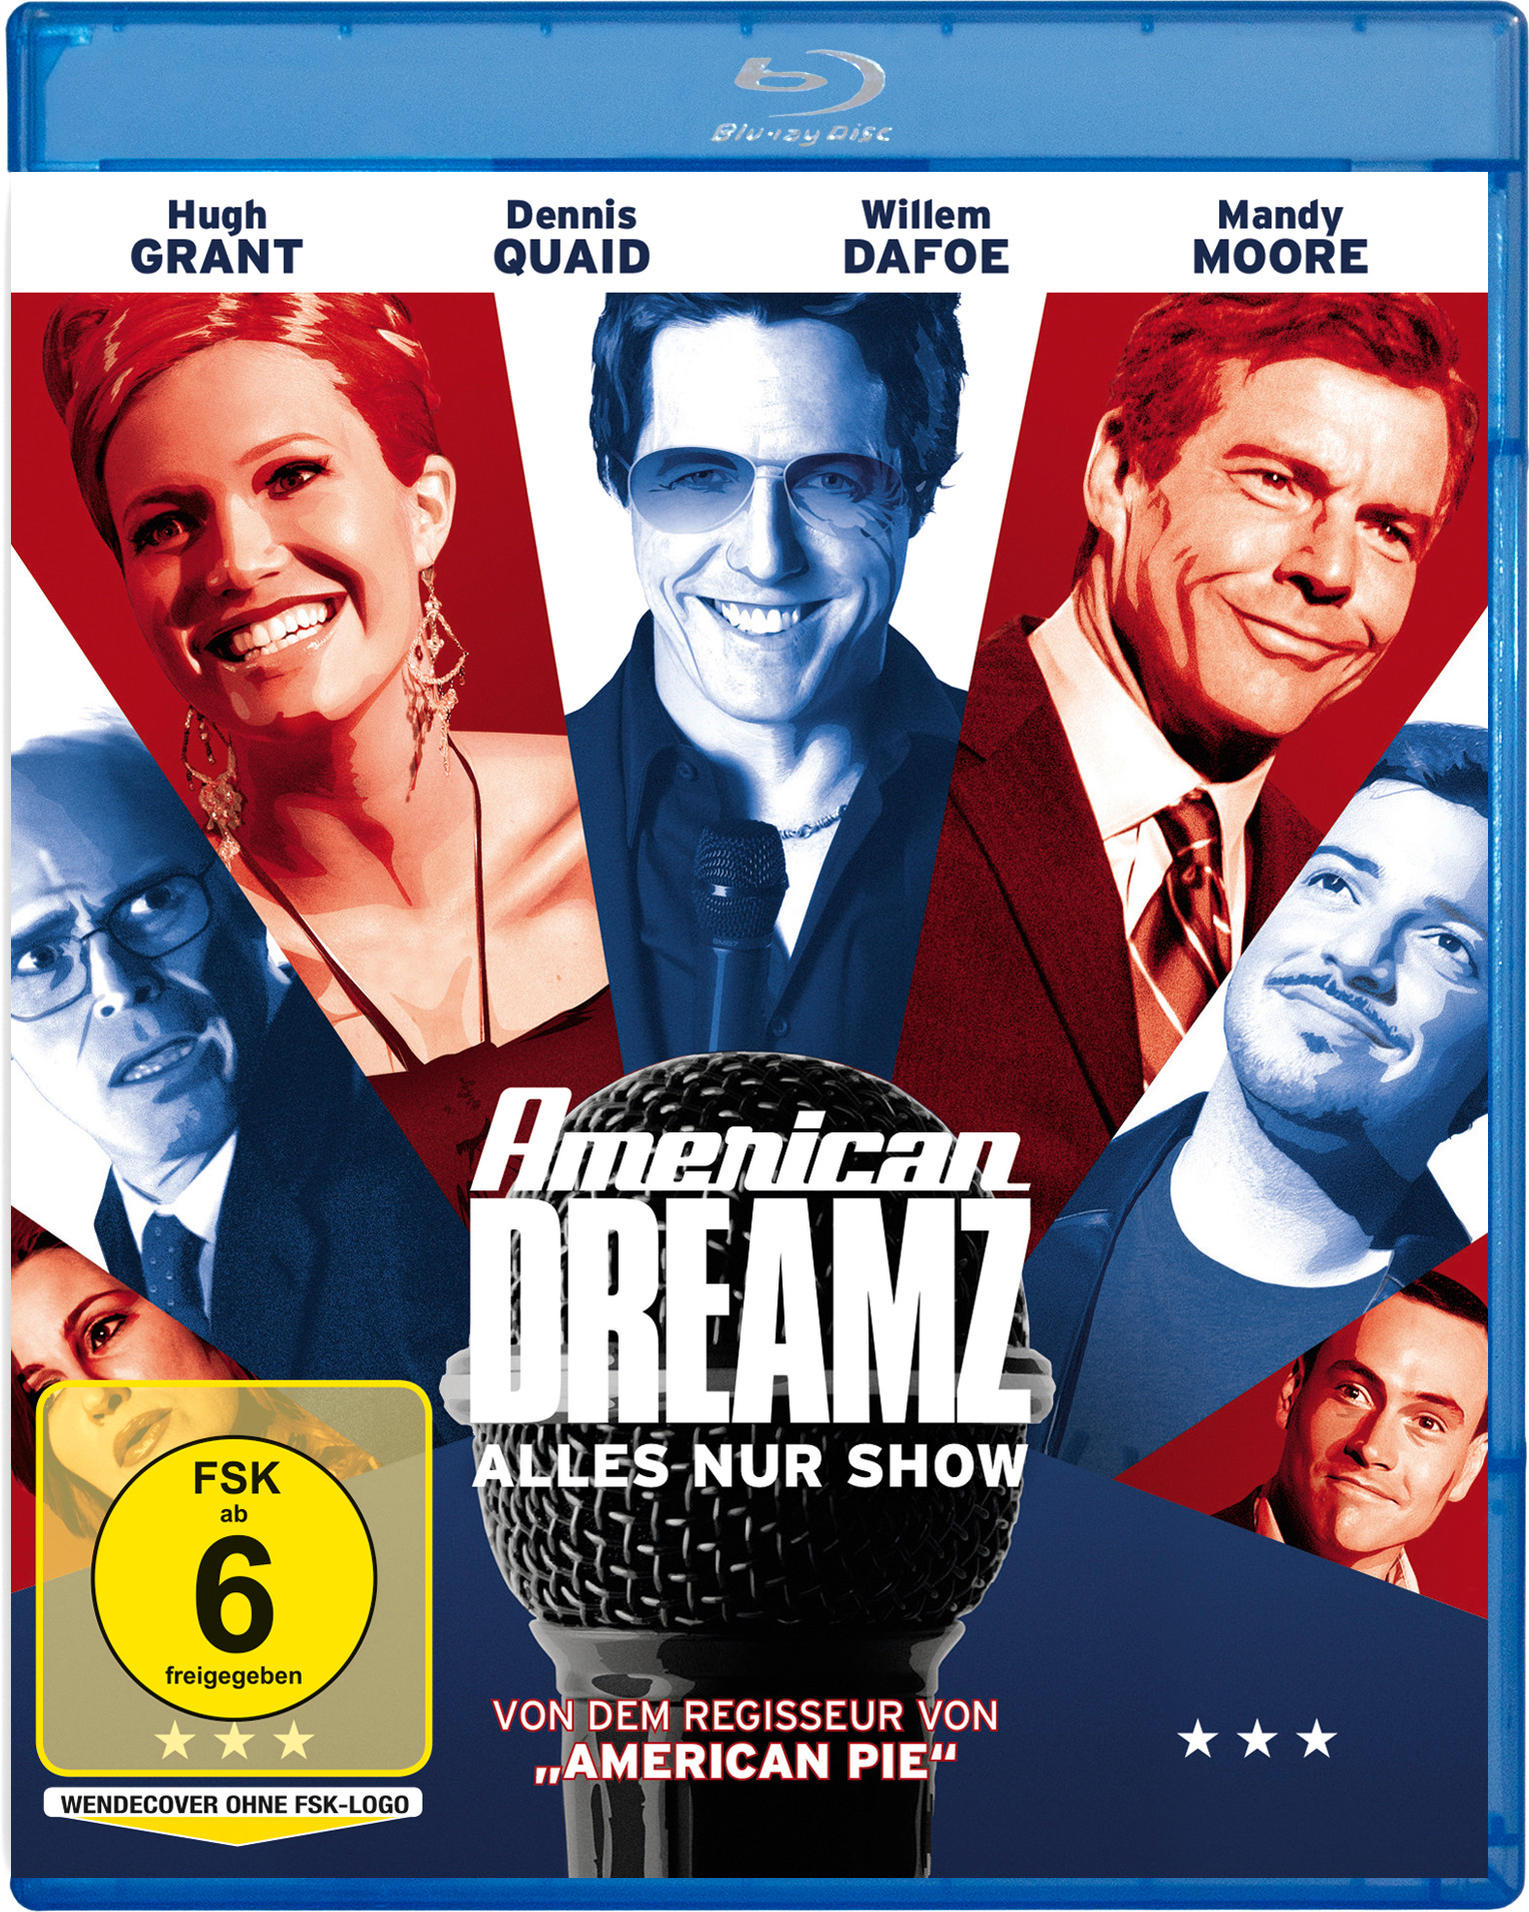 American Dreamz - Alles nur Blu-ray Show